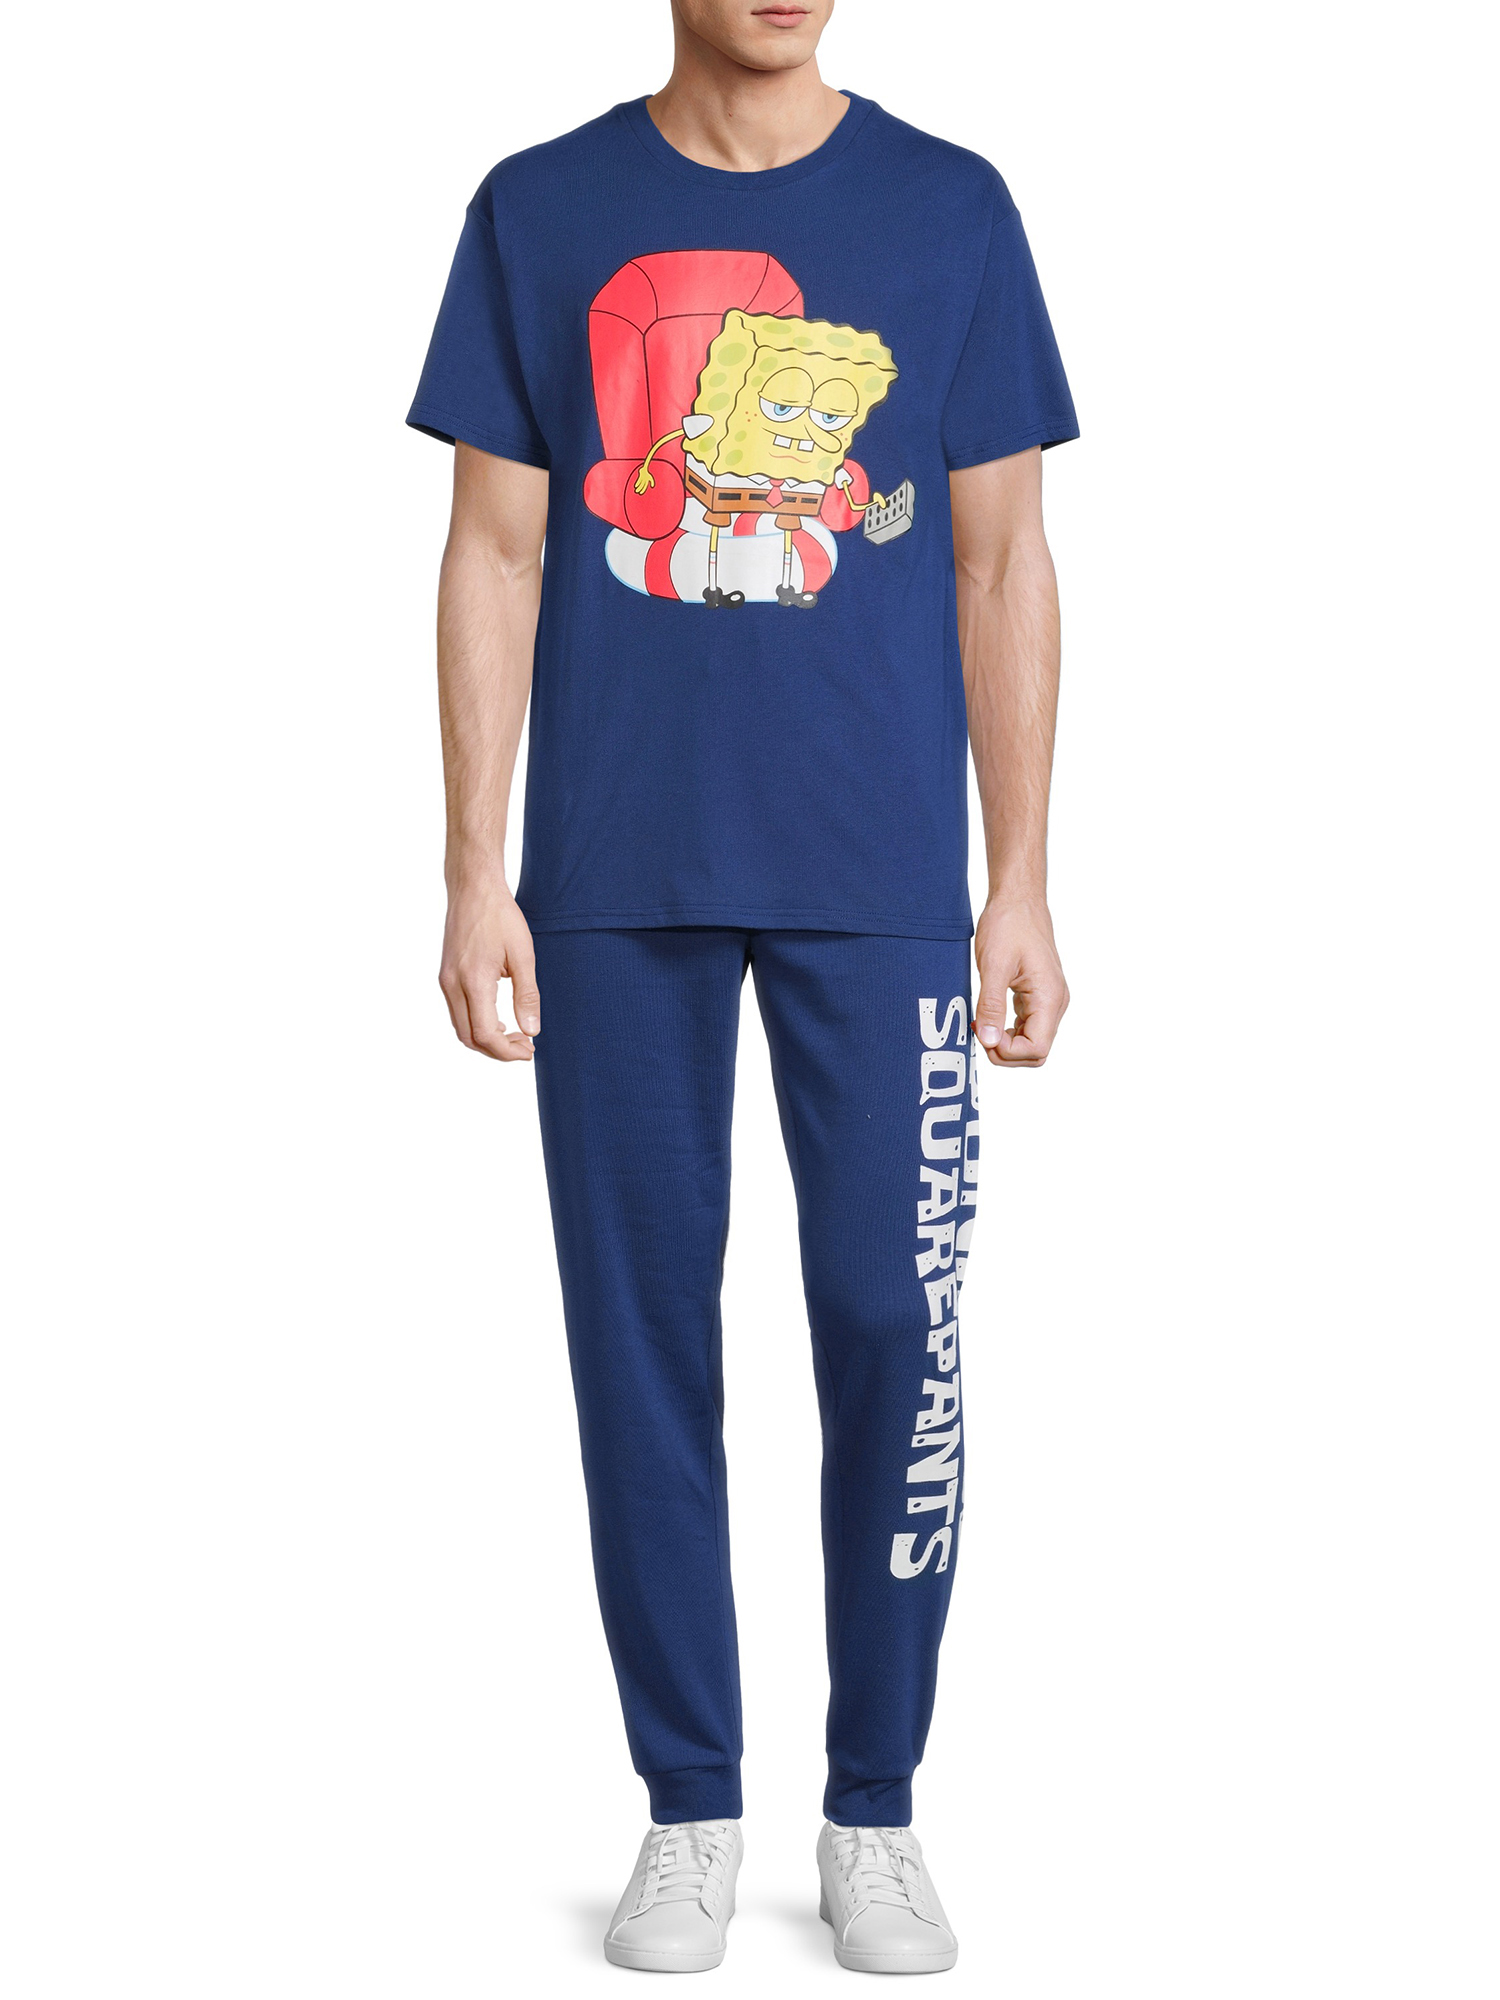 SpongeBob SquarePants Men's & Big Men's Short Sleeve Graphic T-Shirt & Jogger Sweatpants, 2-Piece Set, Sizes S-2X Men's Space Jam Graphic Tee & Sweatpants - image 2 of 5